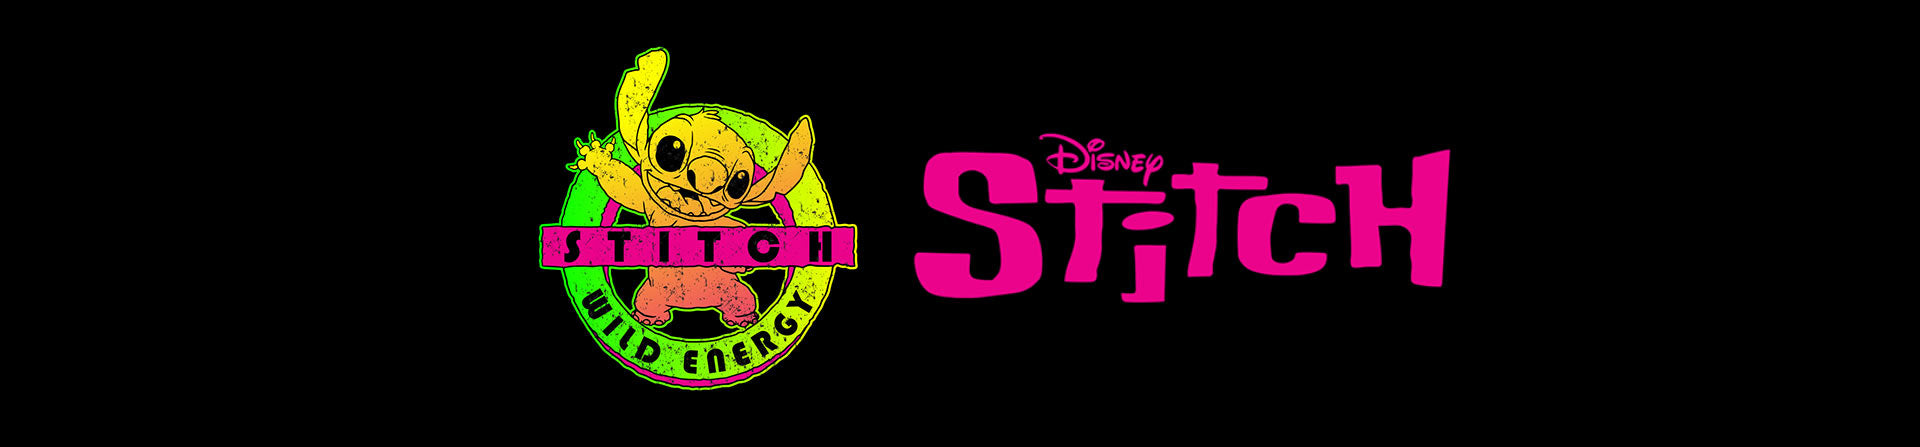 Disney Stitch Collection